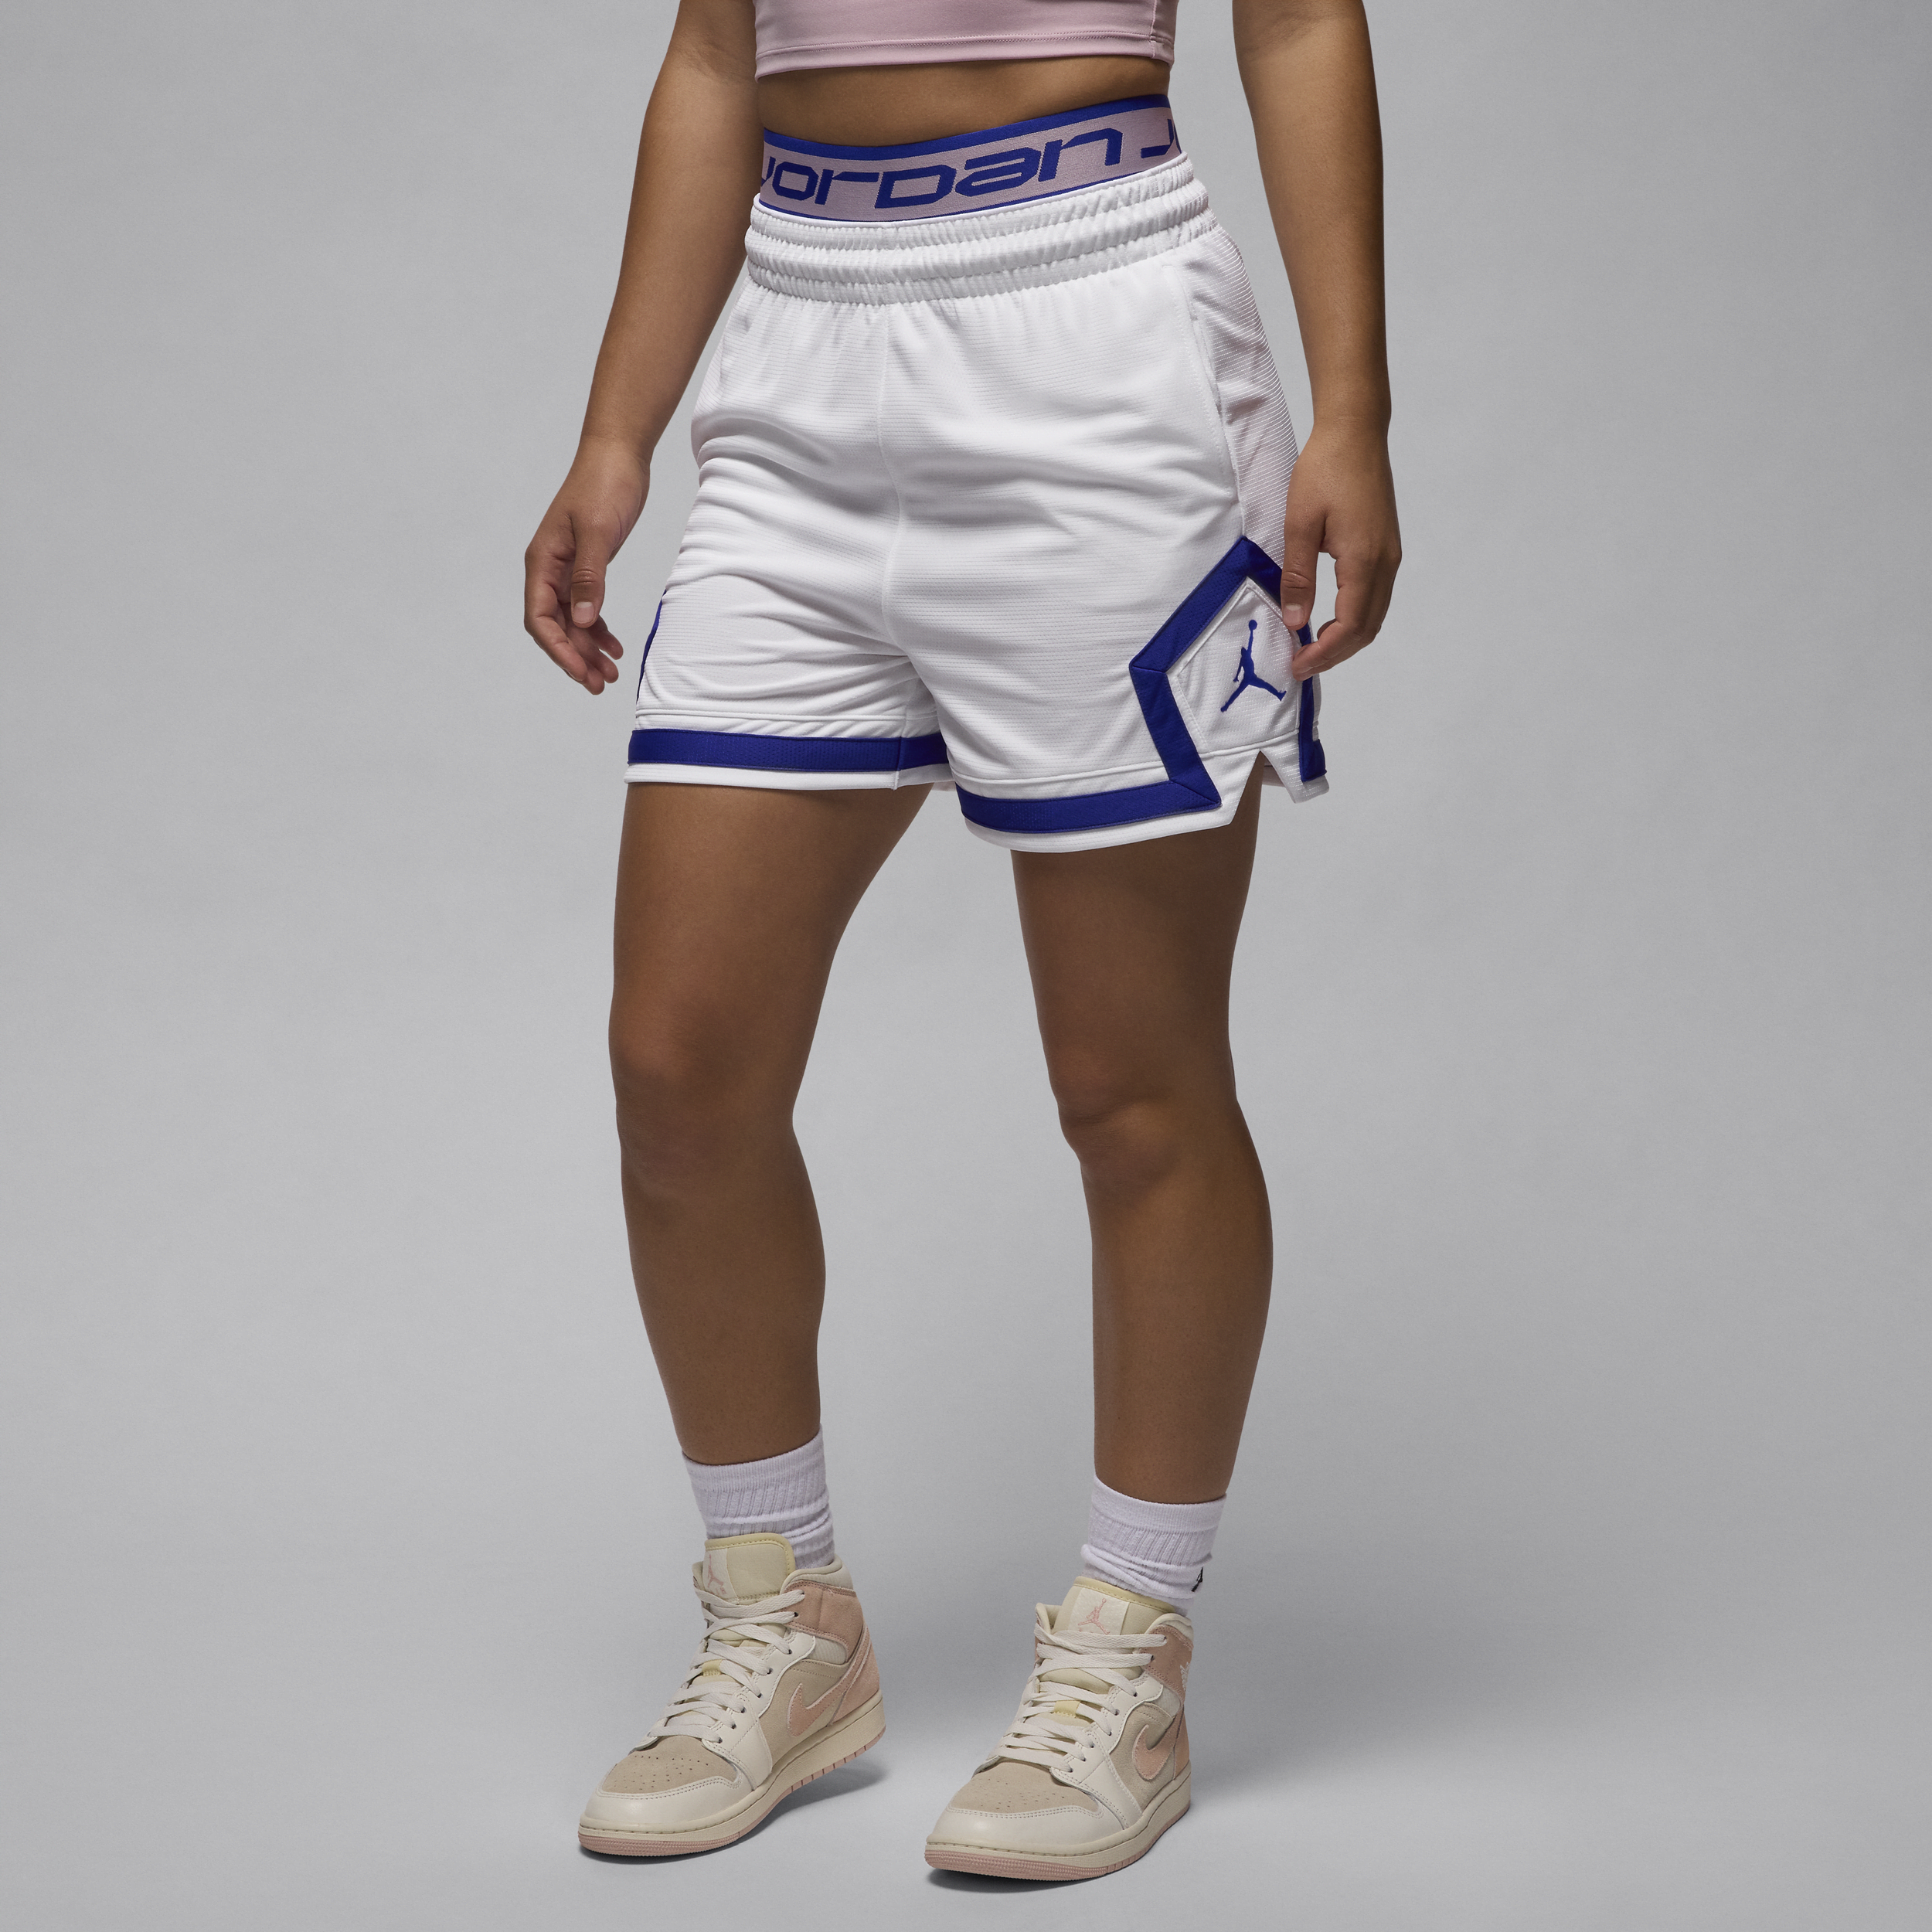 Jordan Sport Diamond-shorts (10 cm) til kvinder - hvid